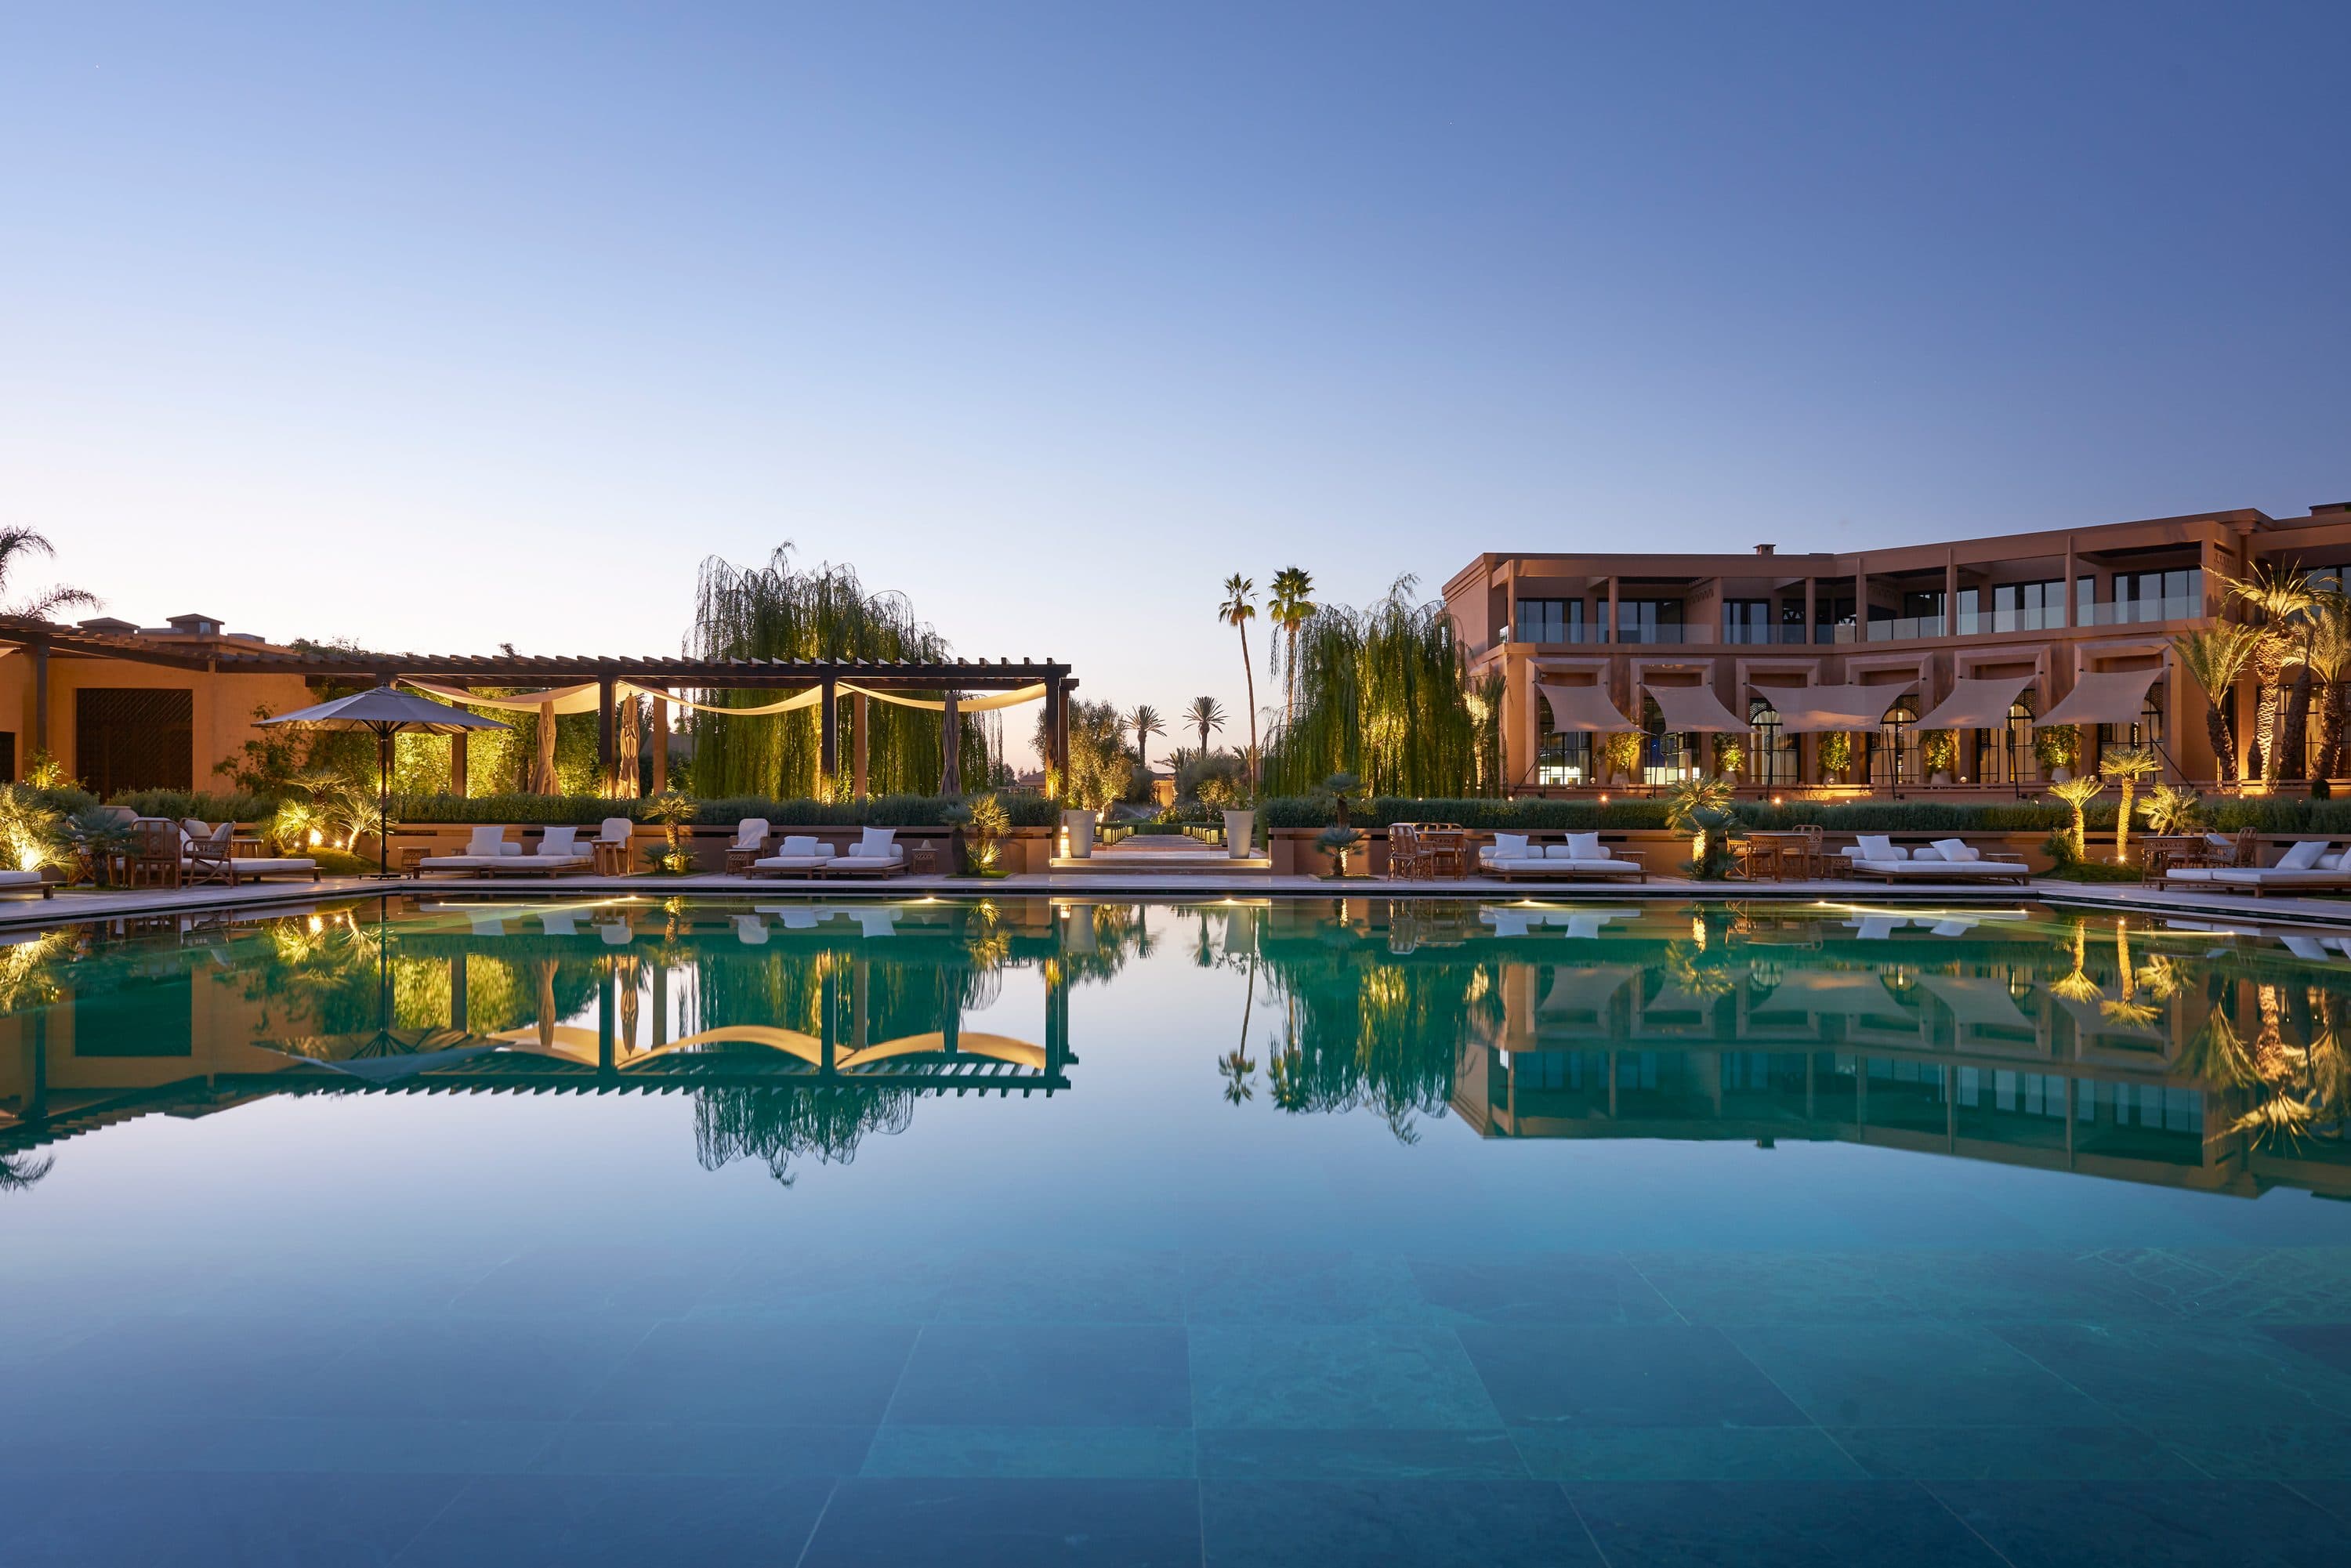 Sun loungers surround the pool at Mandarin Oriental, Marrakech